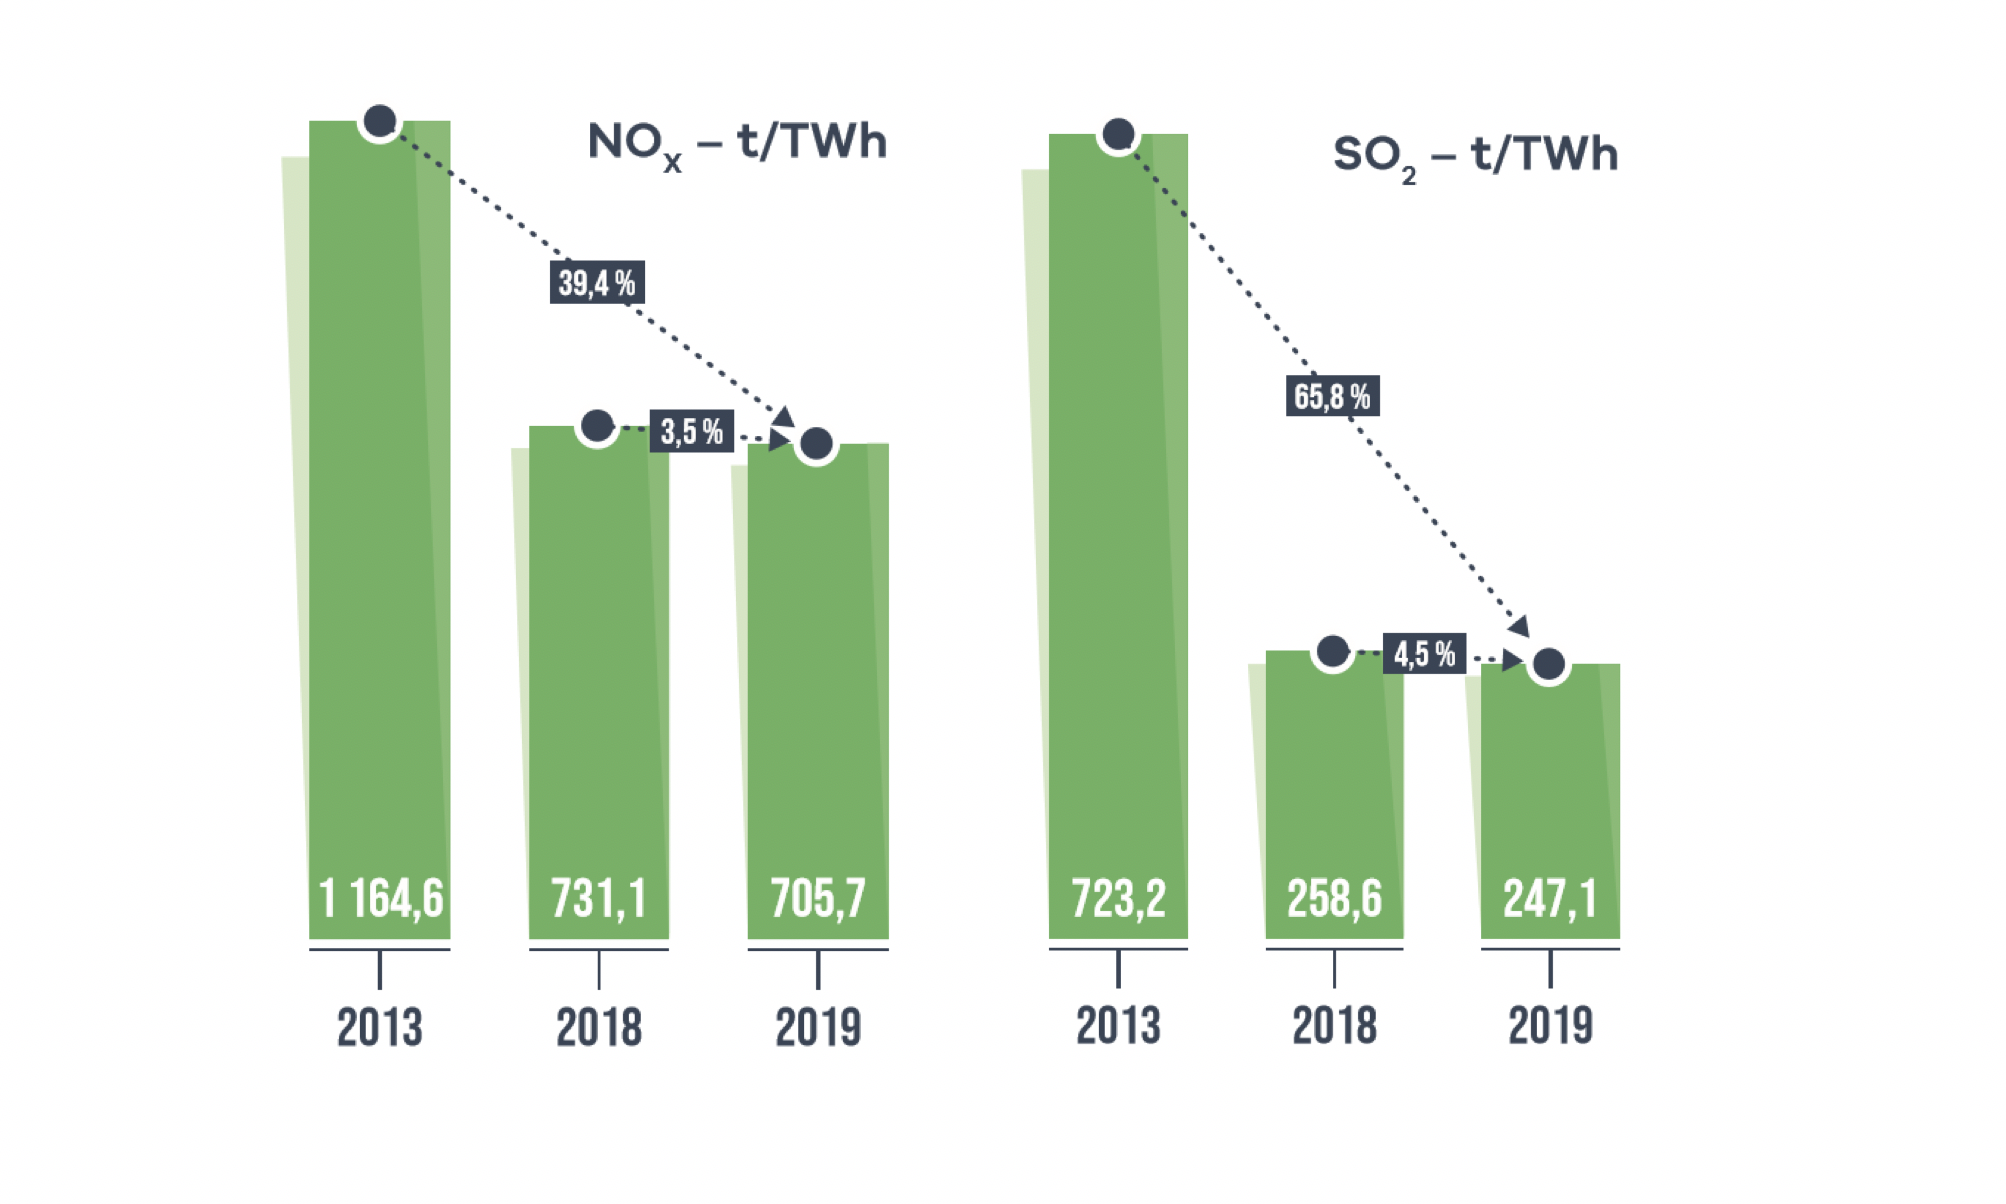 Pokles emisí NOx a SO2 na jednotku TWh v elektrárně Chvaletice